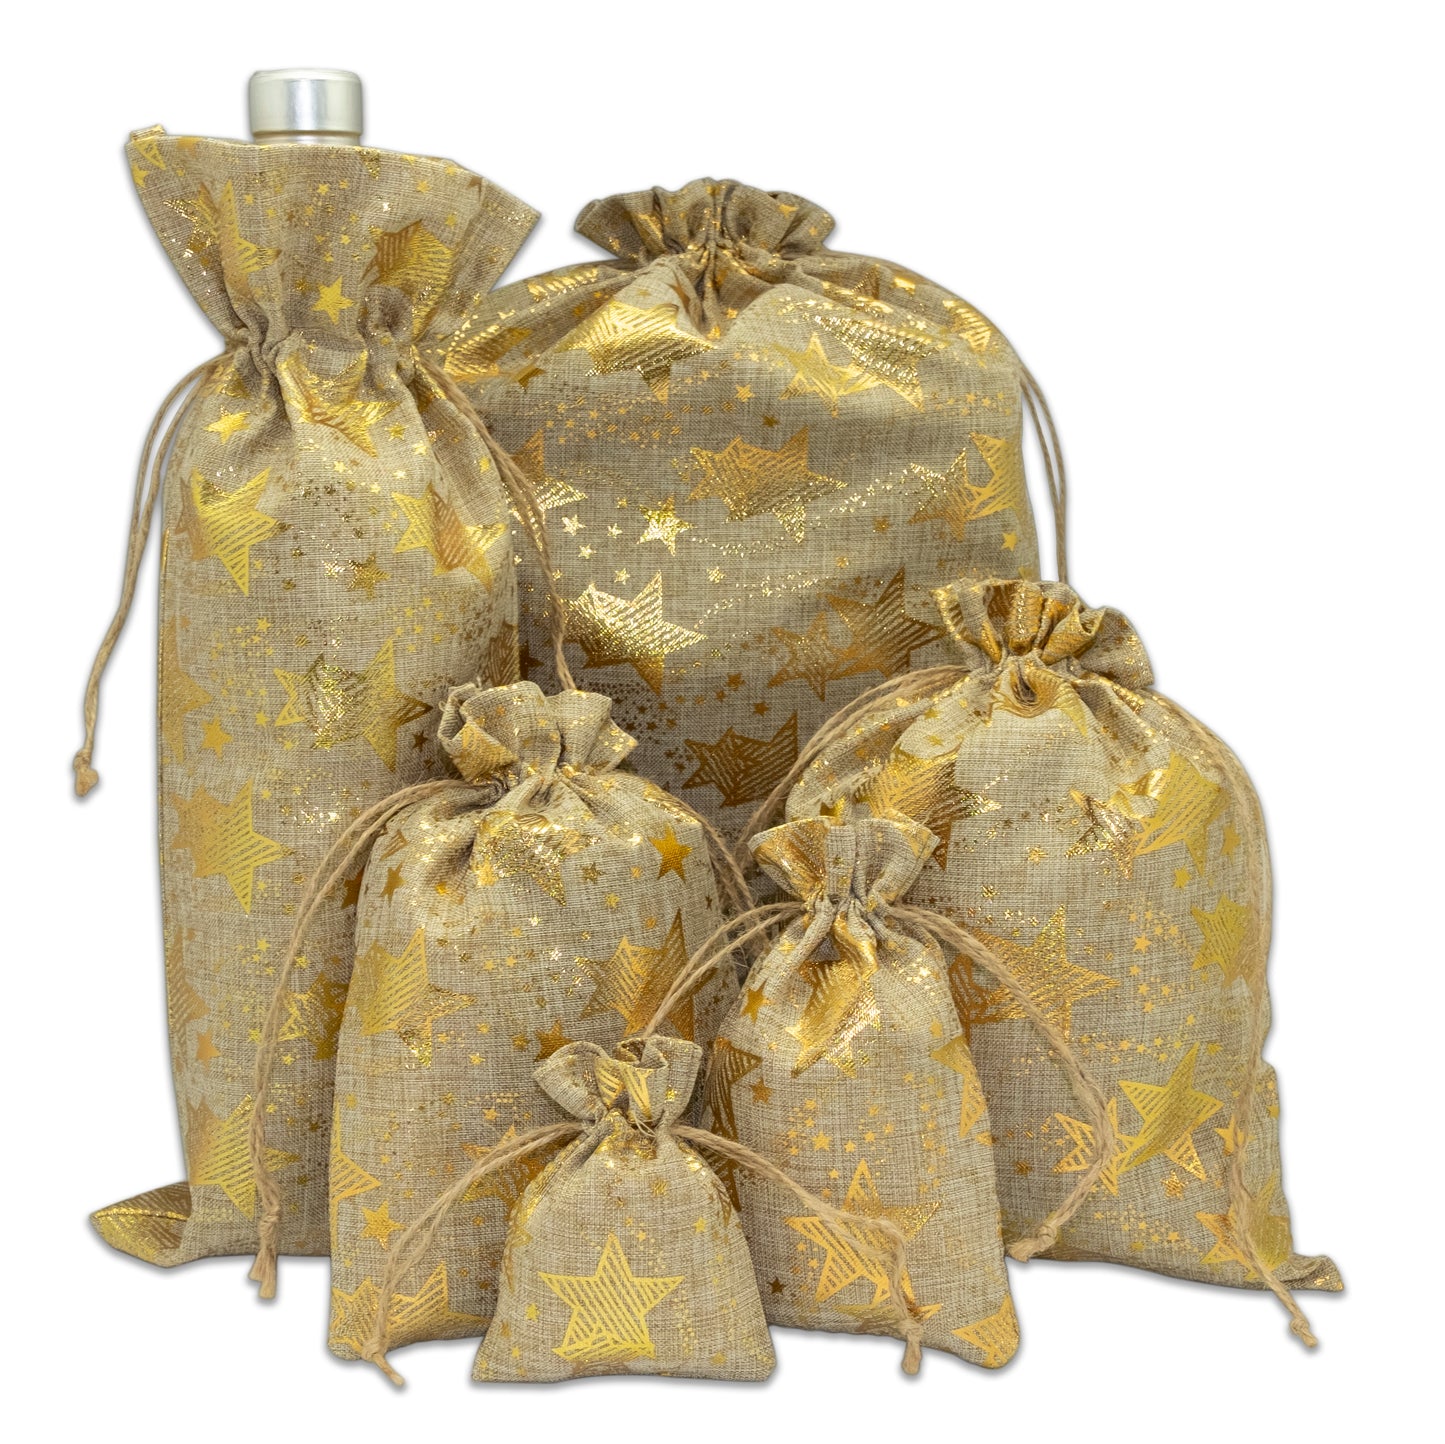 3" x 4" Jute Burlap Gold Star Drawstring Gift Bags